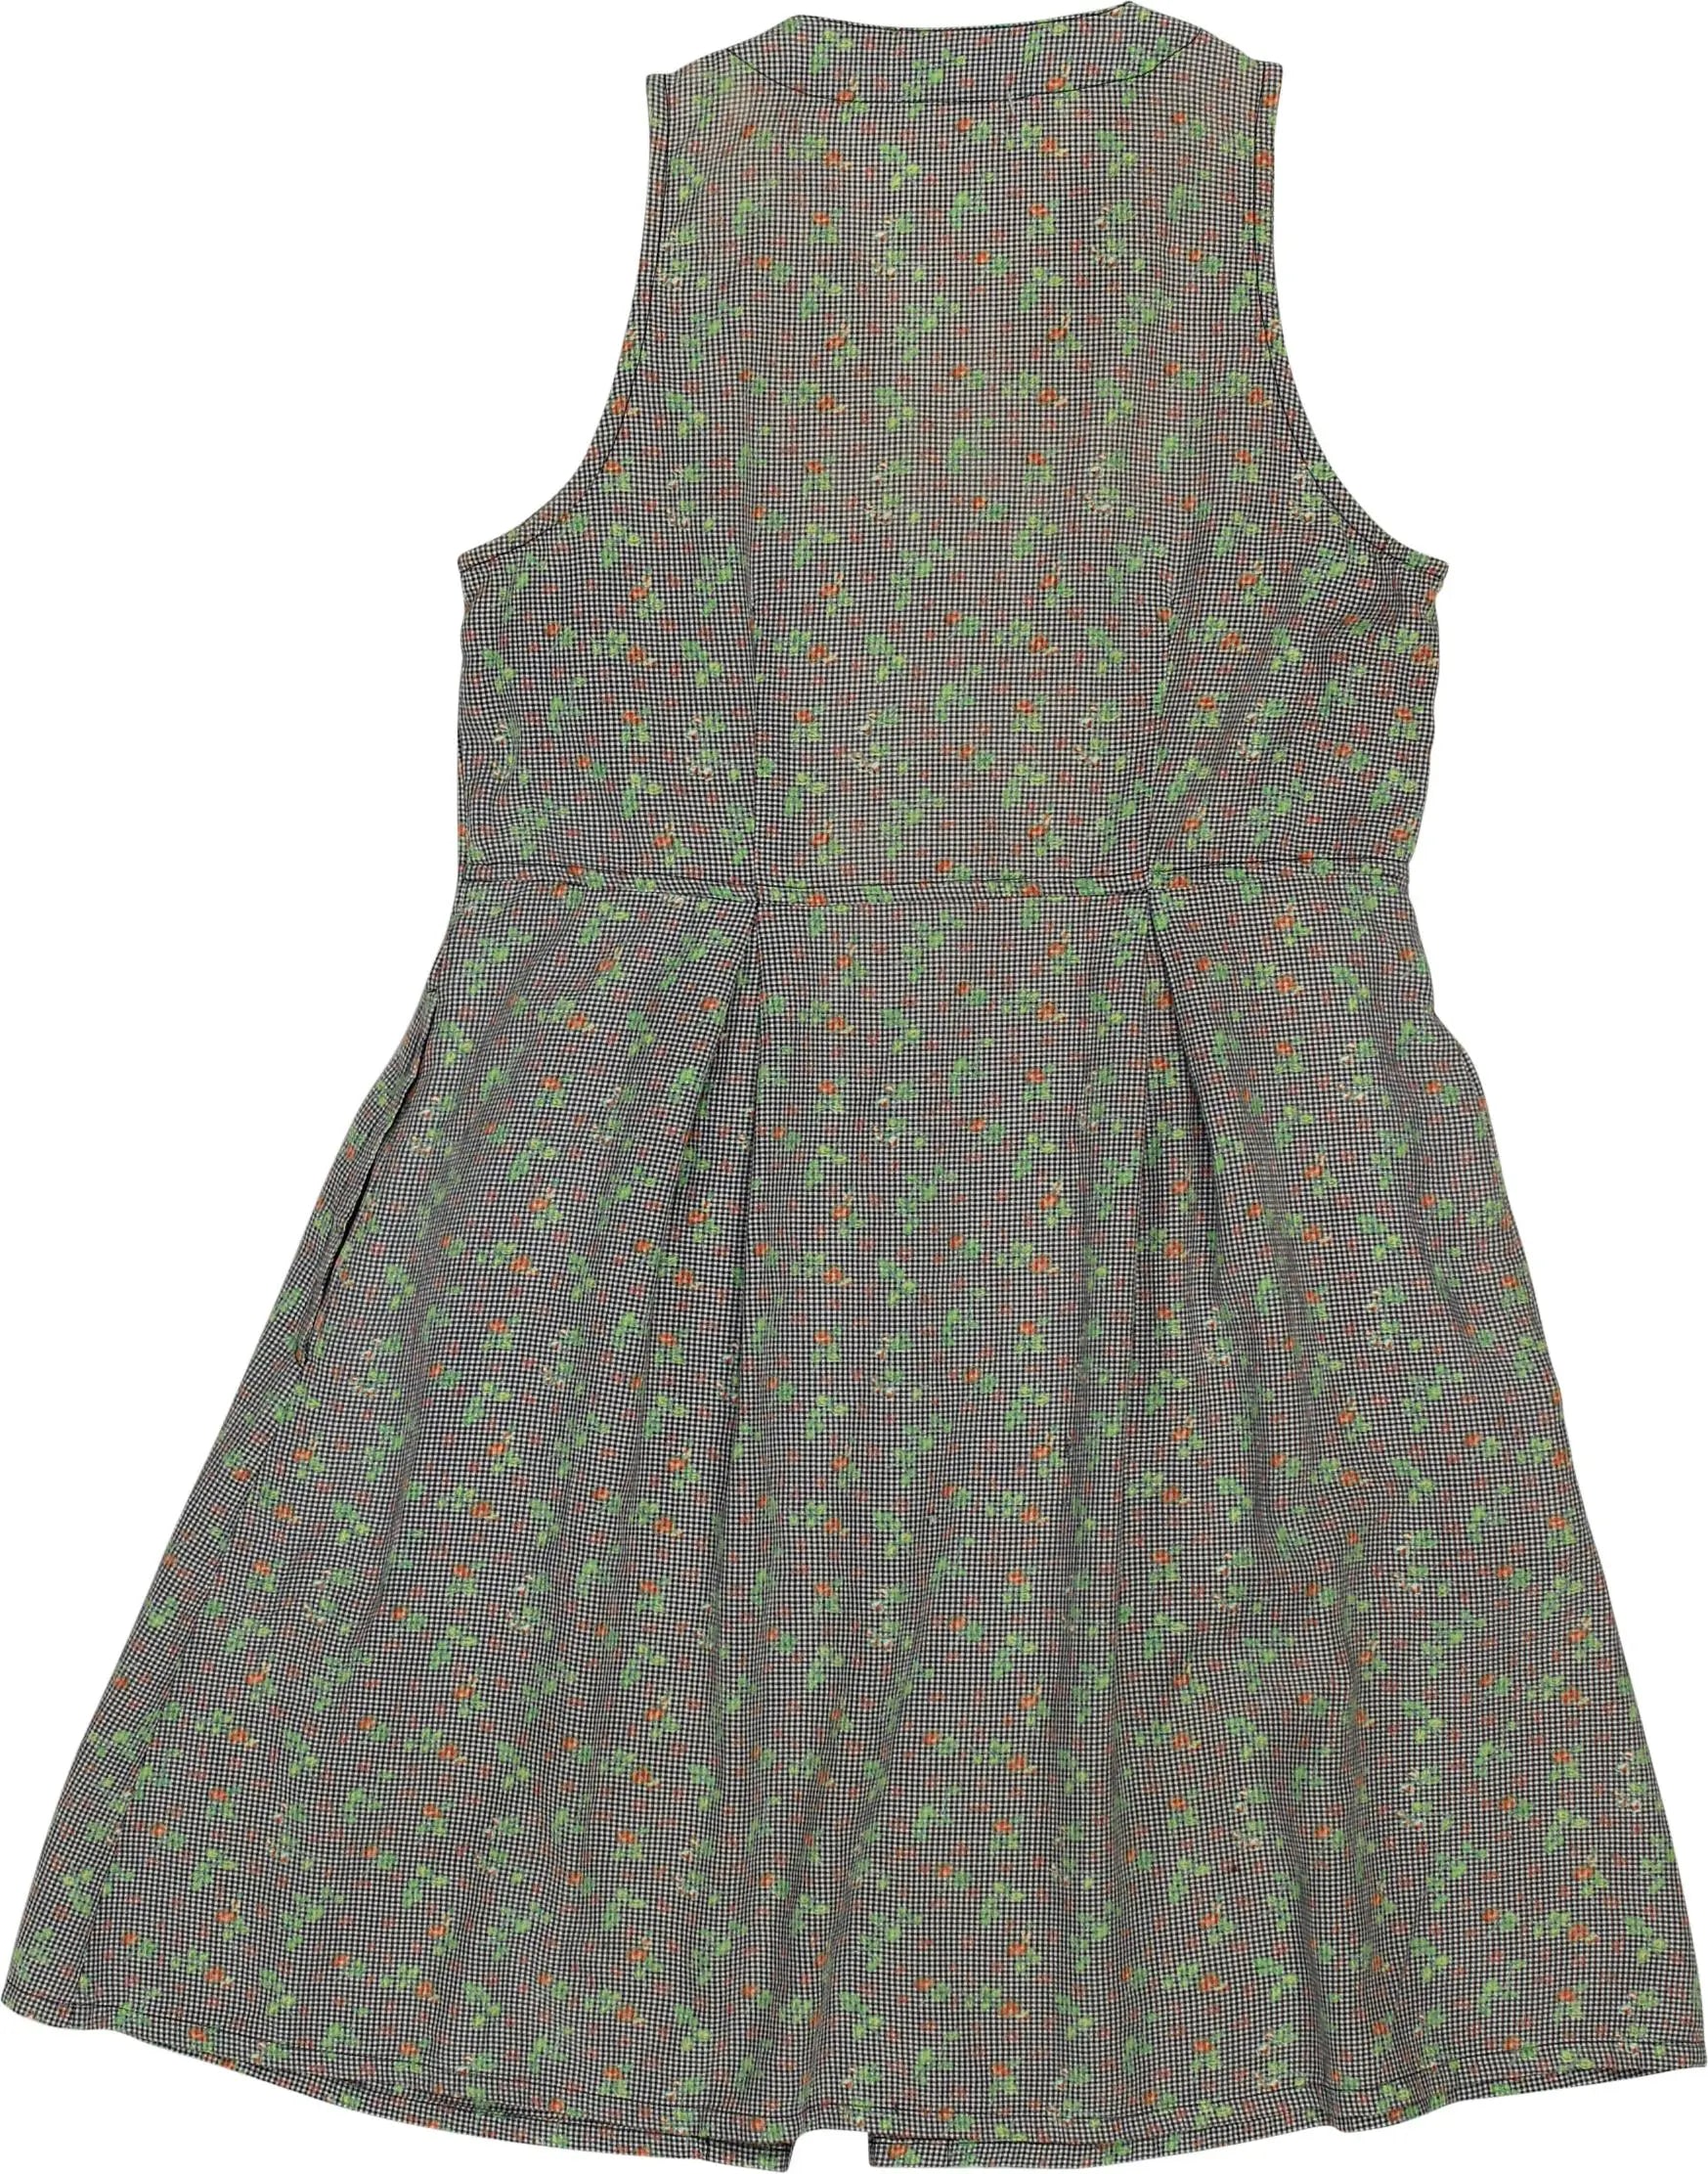 Esprit - Floral dress- ThriftTale.com - Vintage and second handclothing